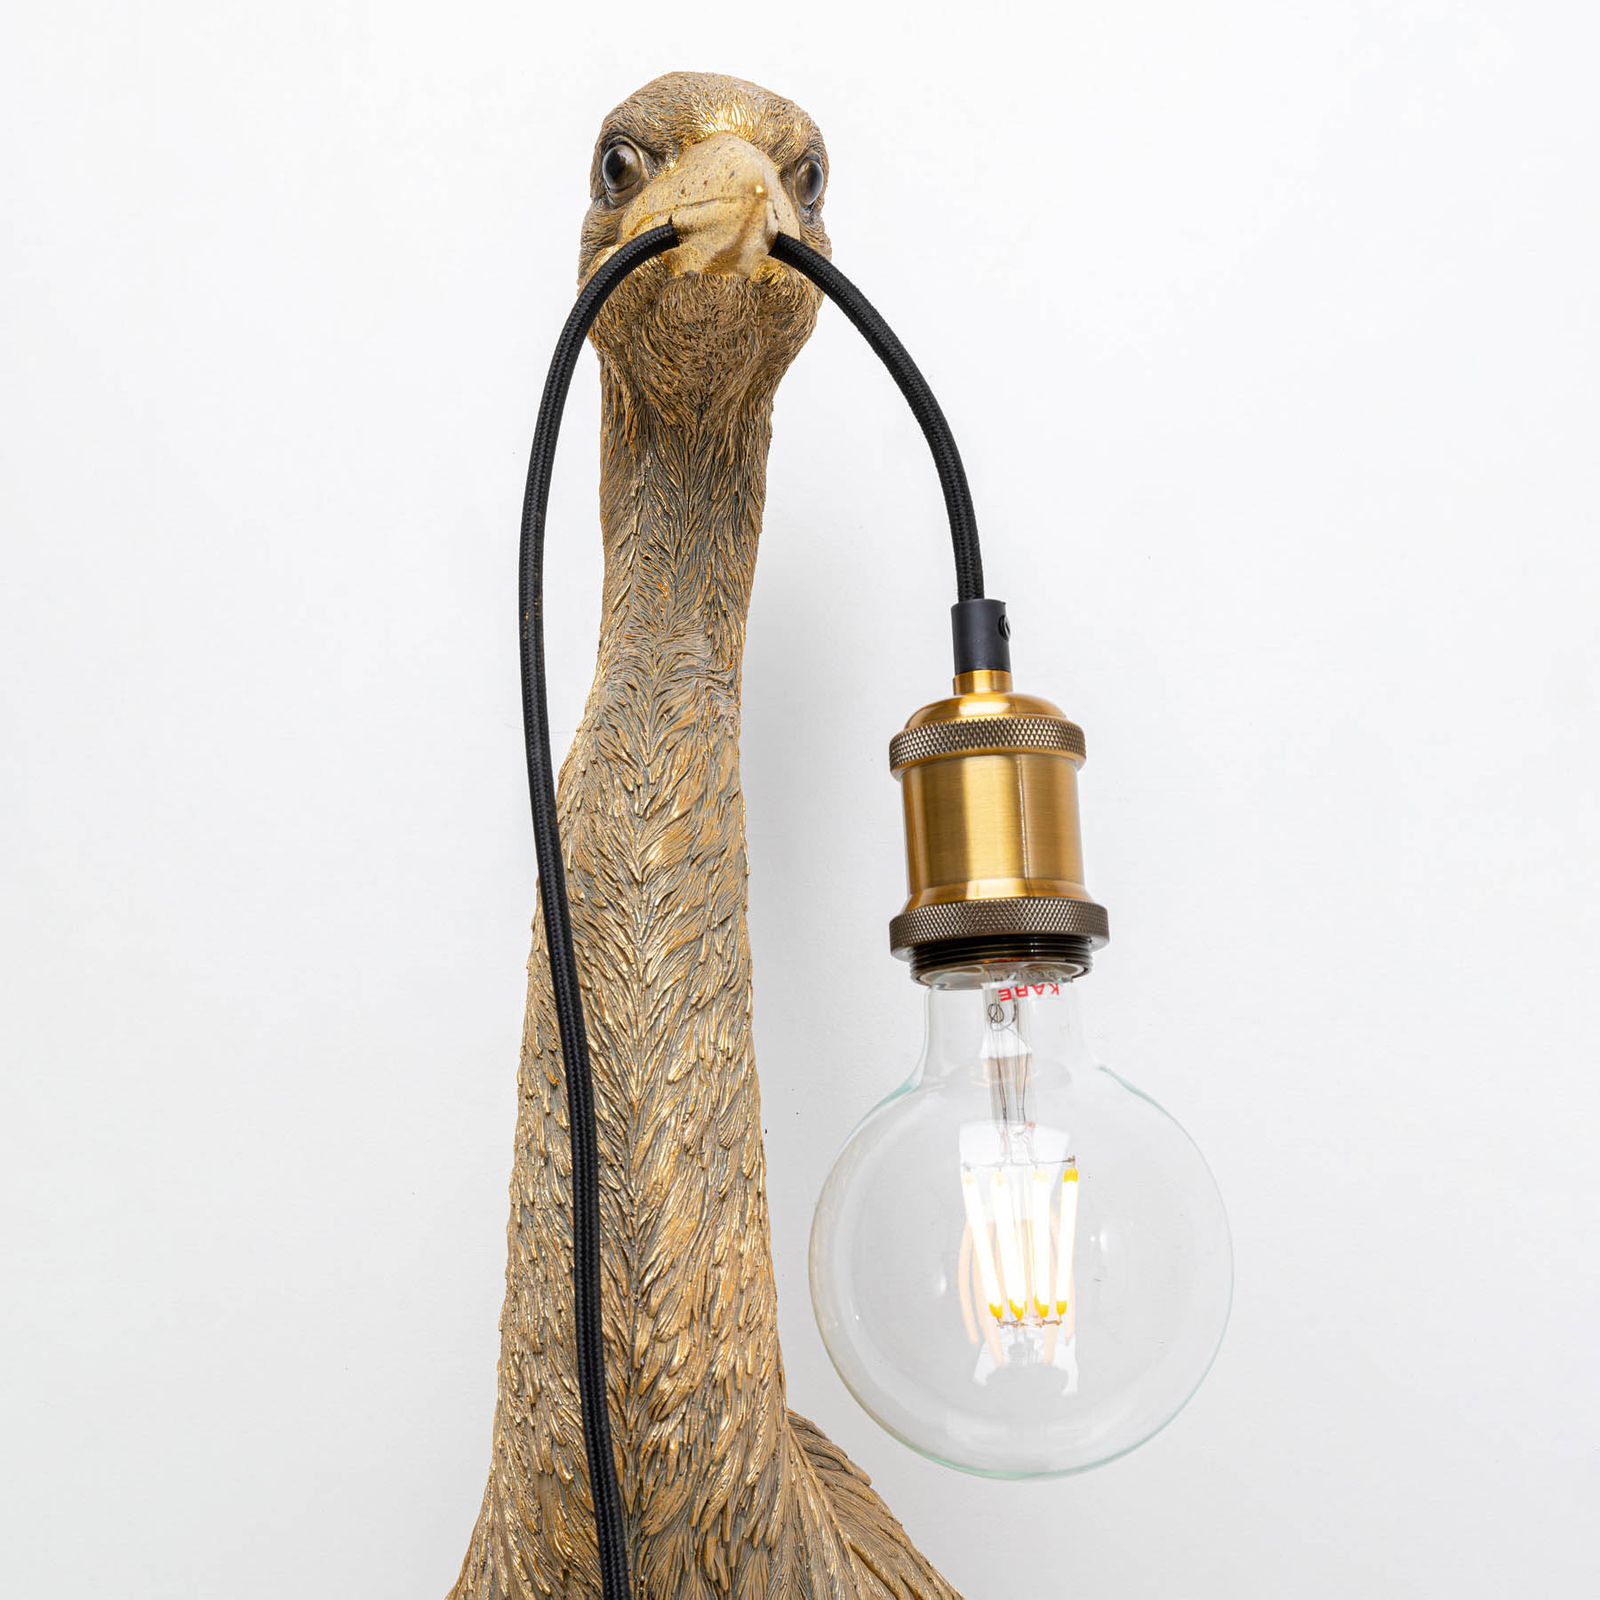 KAREN Animal Heron wandlamp met stekker